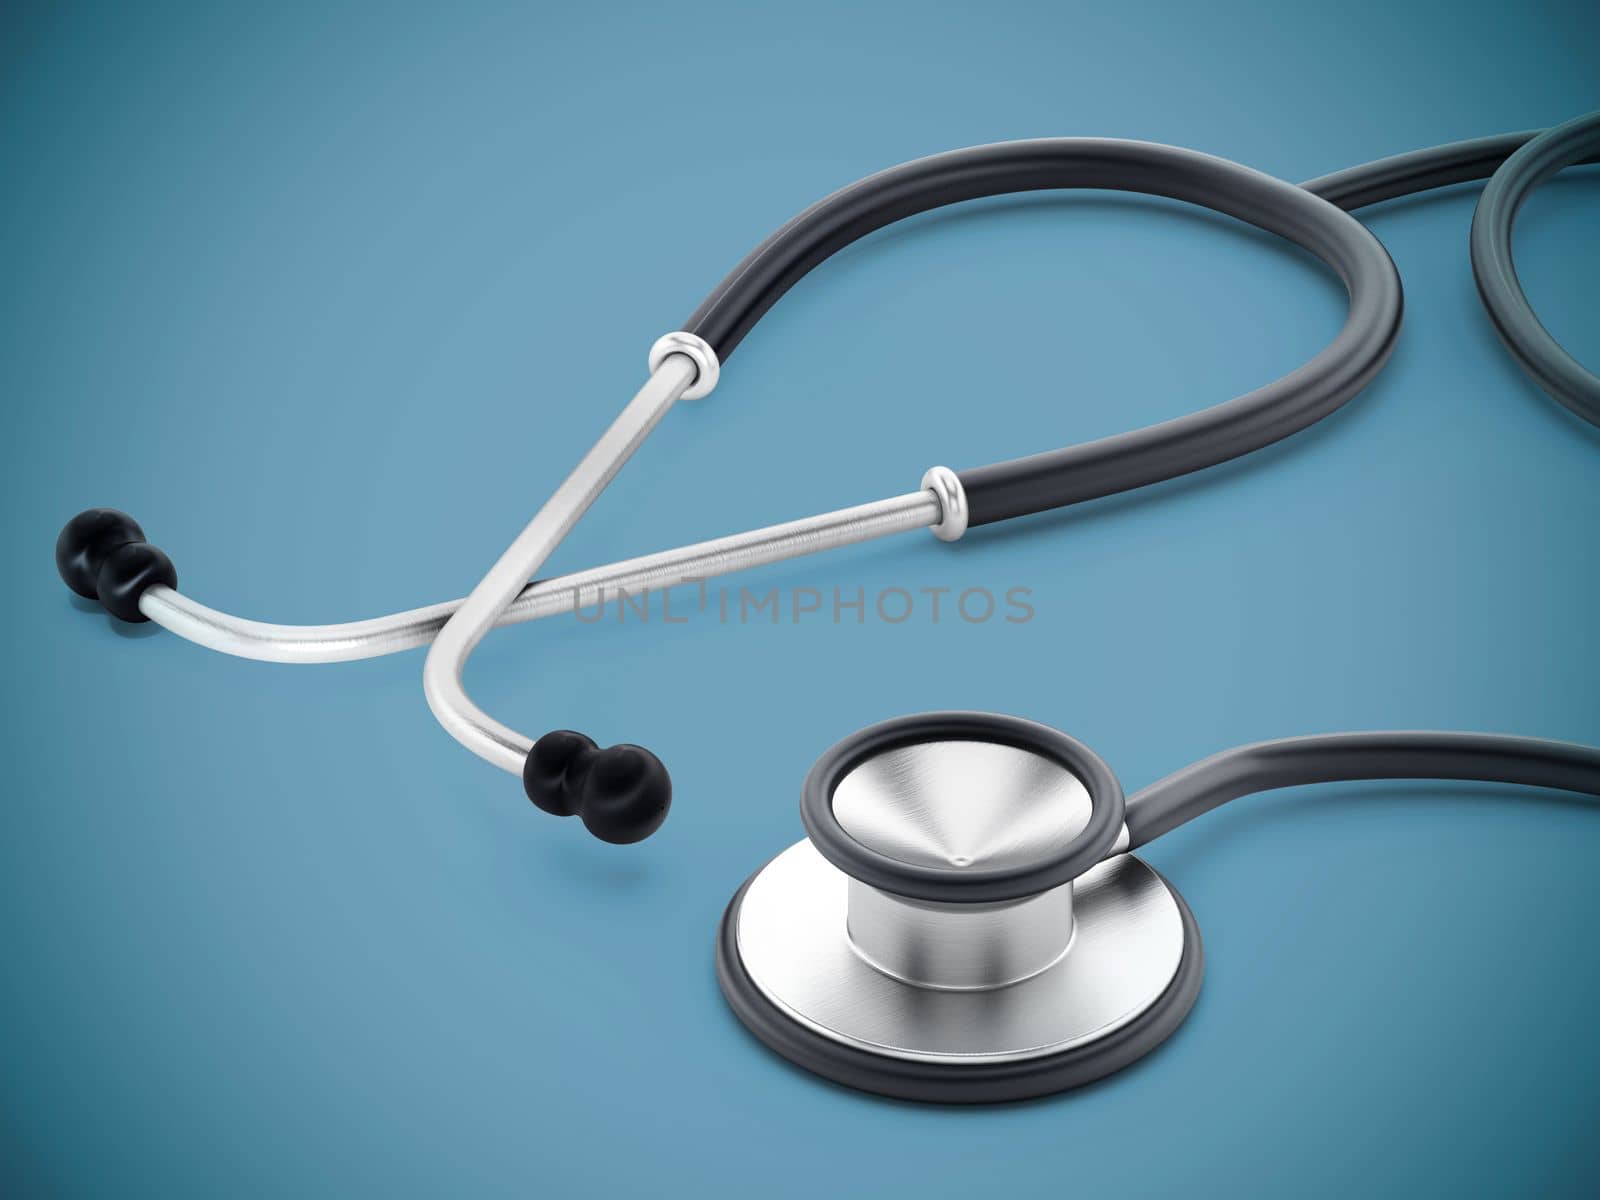 Stethoscope standing on blue surface. 3D illustration.